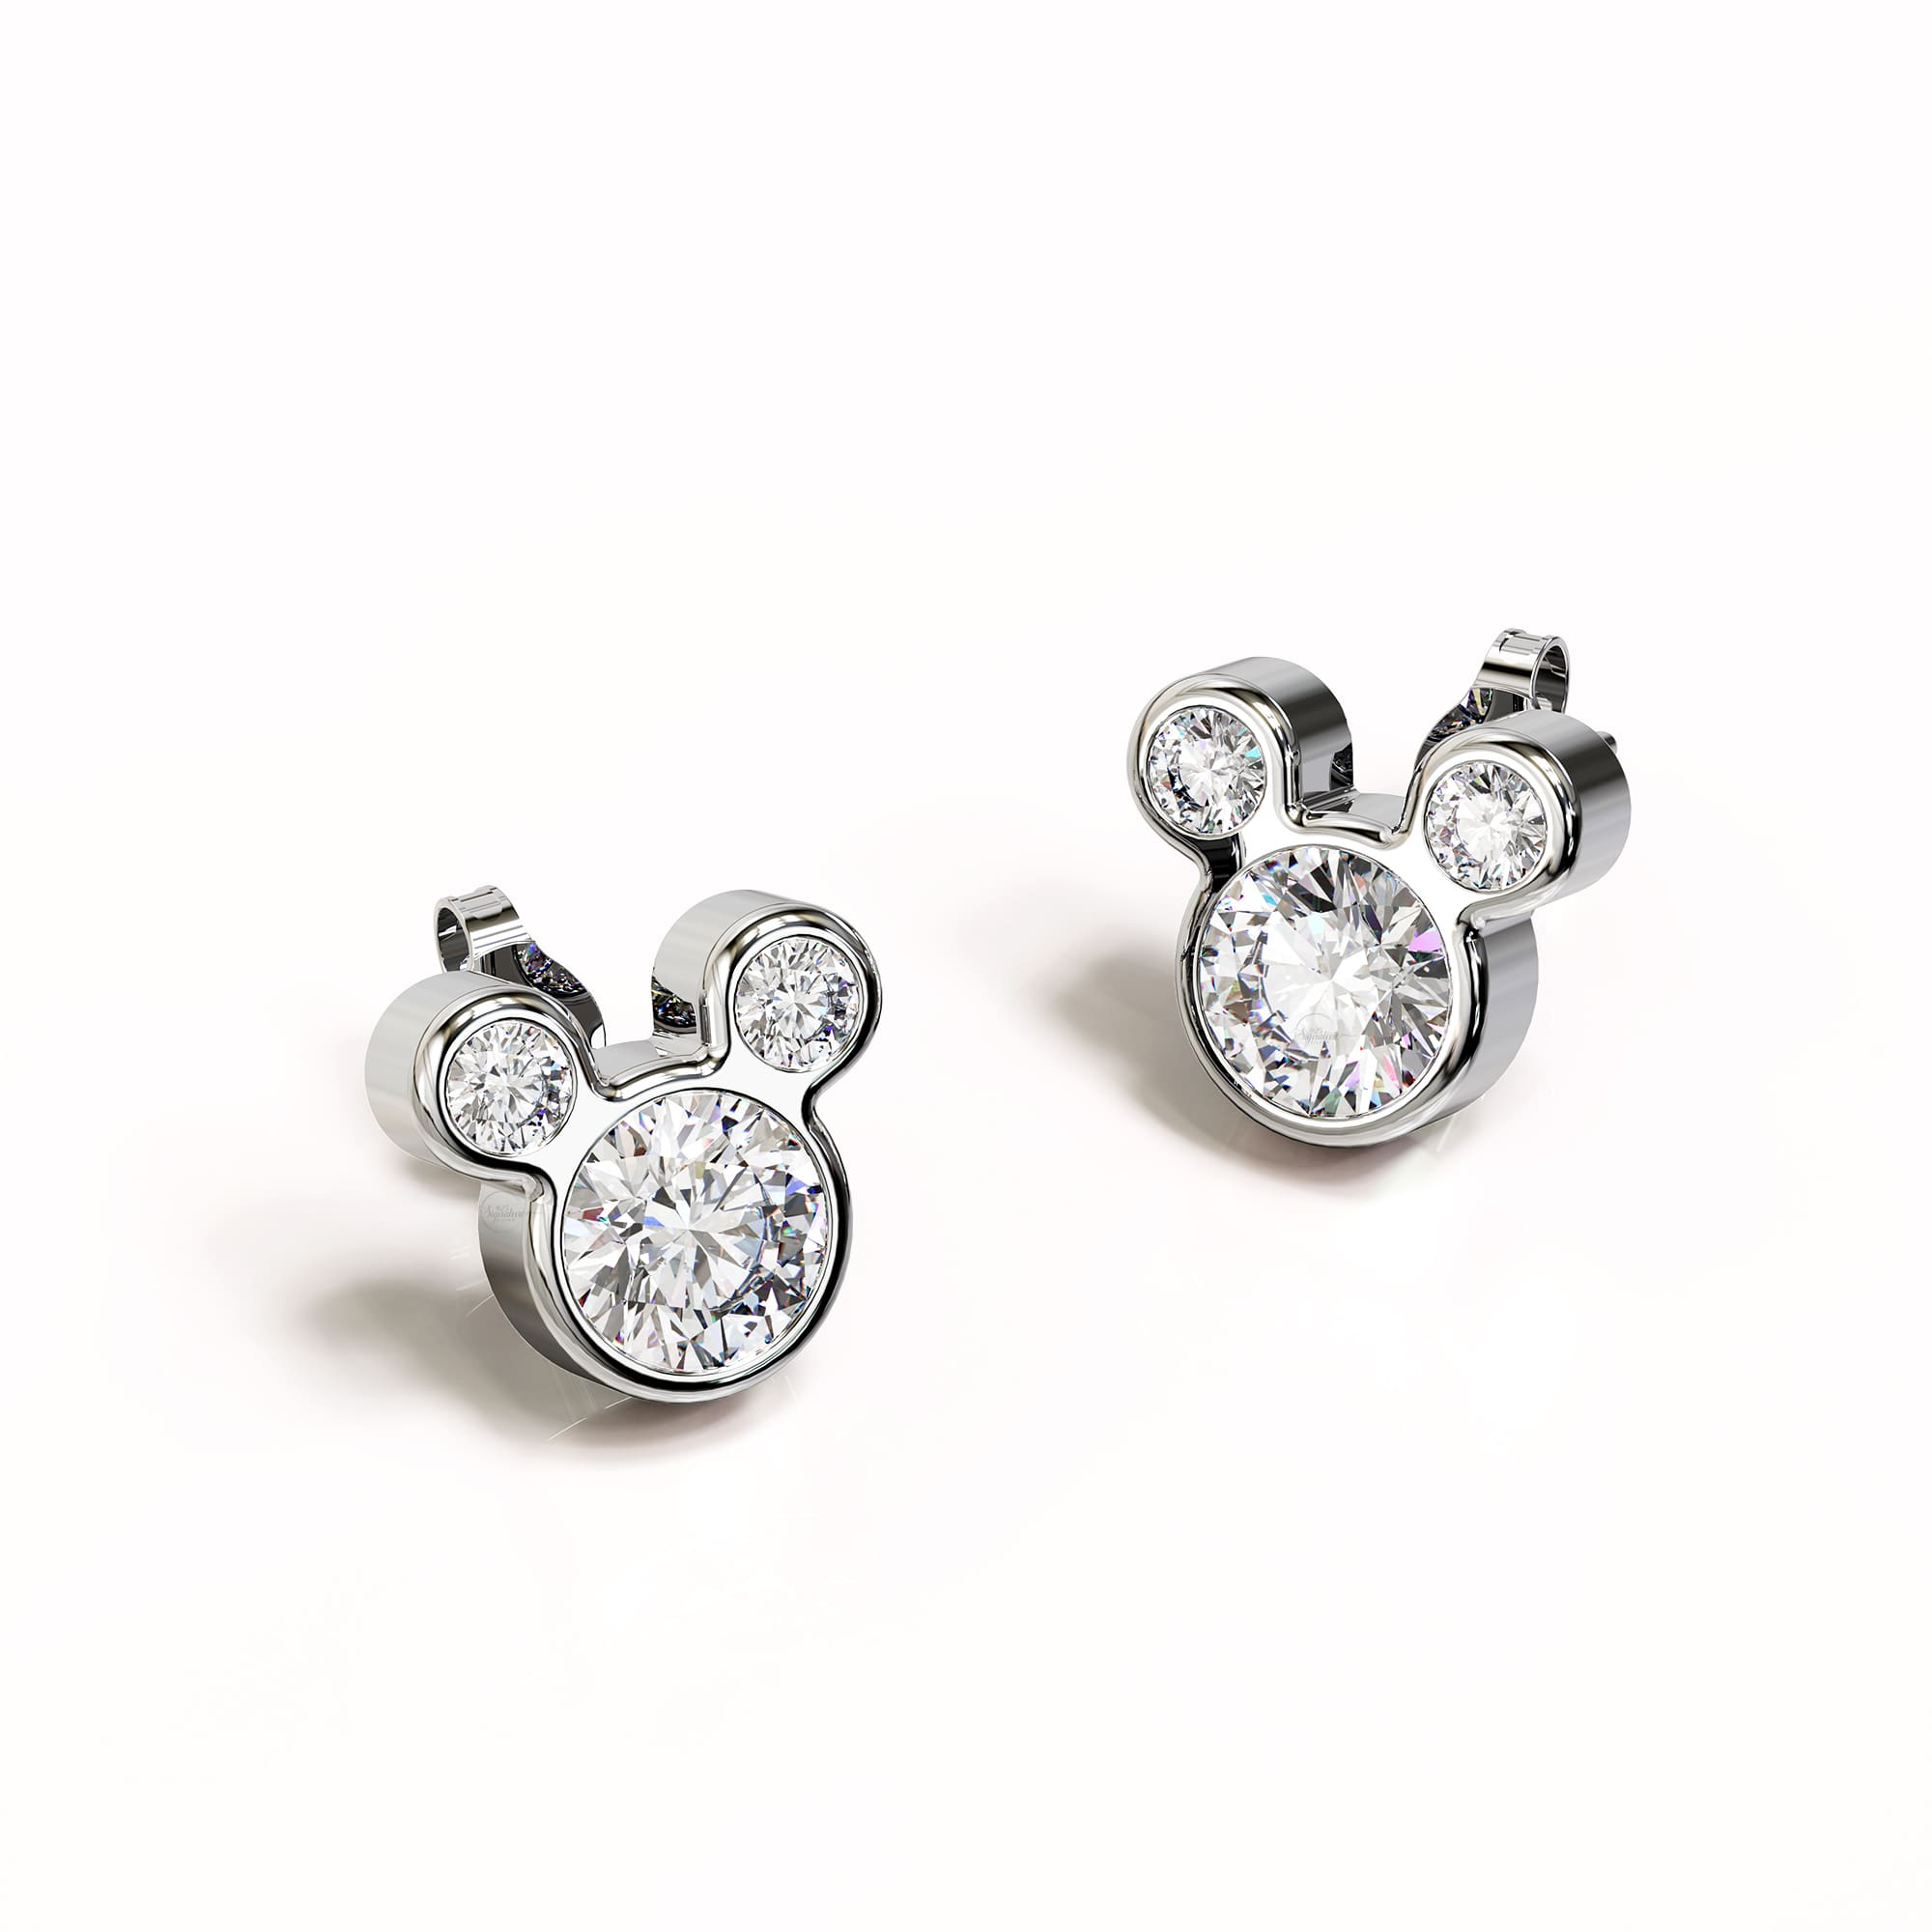 Solid 925 Sterling Silver Mickey Earrings